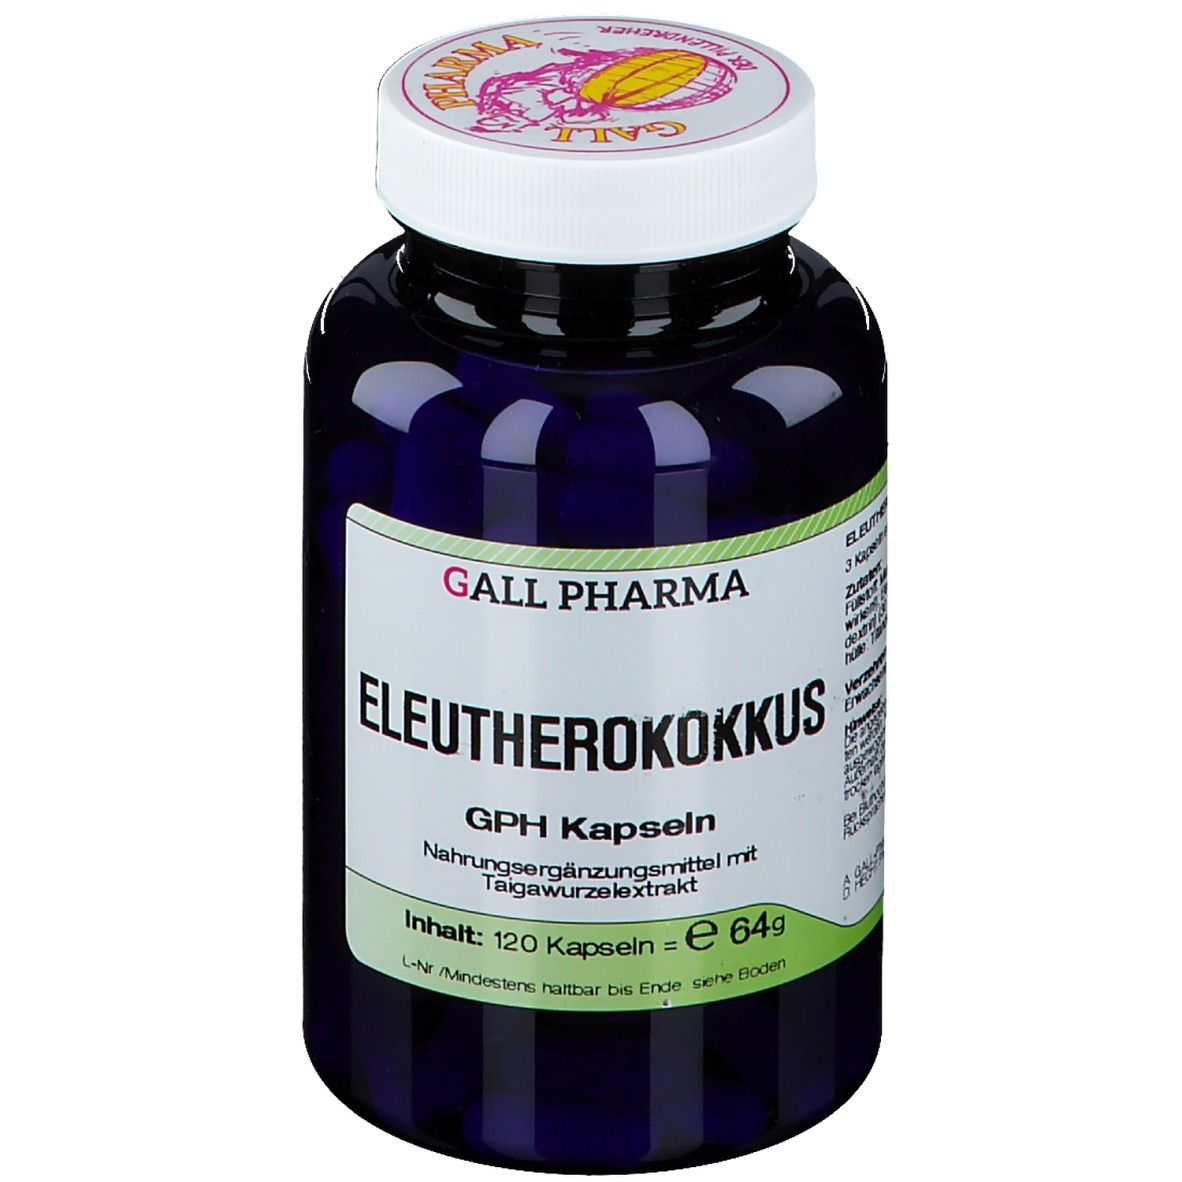 Gall Pharma Eleutherokokkus GPH Kapseln